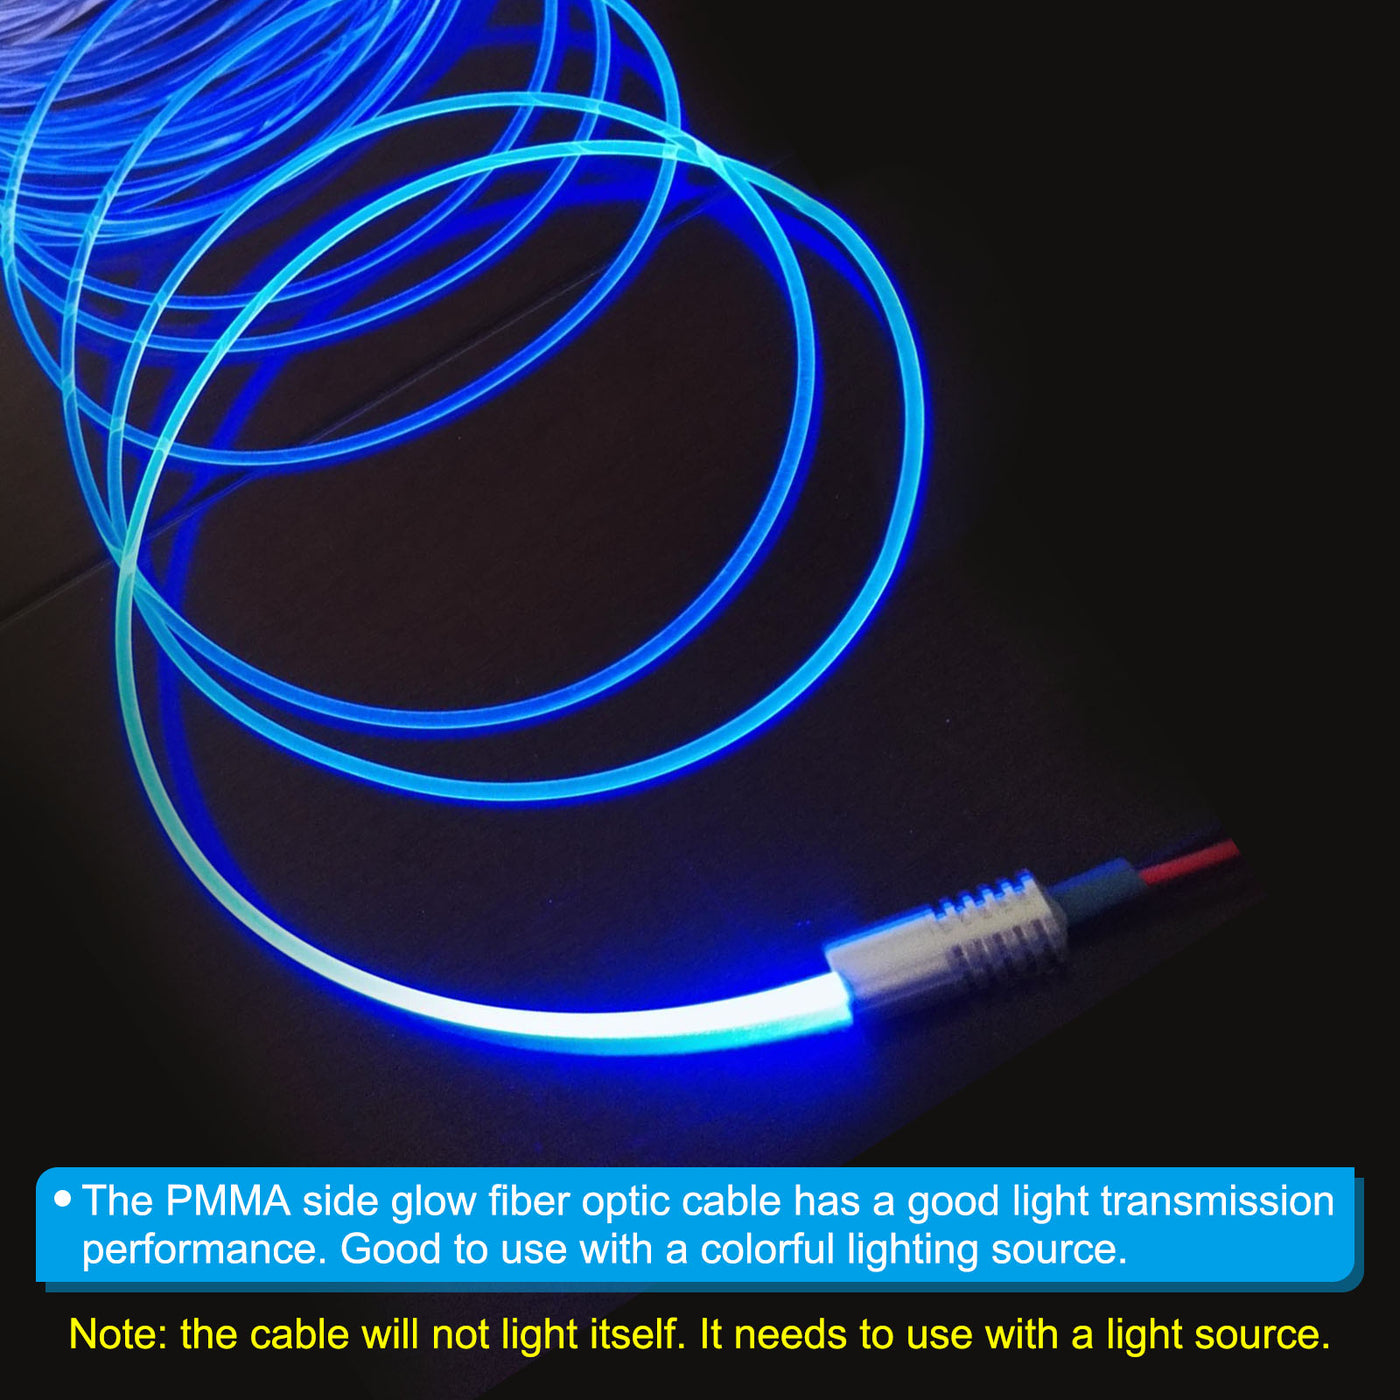 Harfington 3mm 3.0m PMMA Side Glow Fiber Optic Cable Kit, with LED Aluminum Illuminator 12V 1.5W Guide Light Source Decoration for Home DIY Lighting, Blue